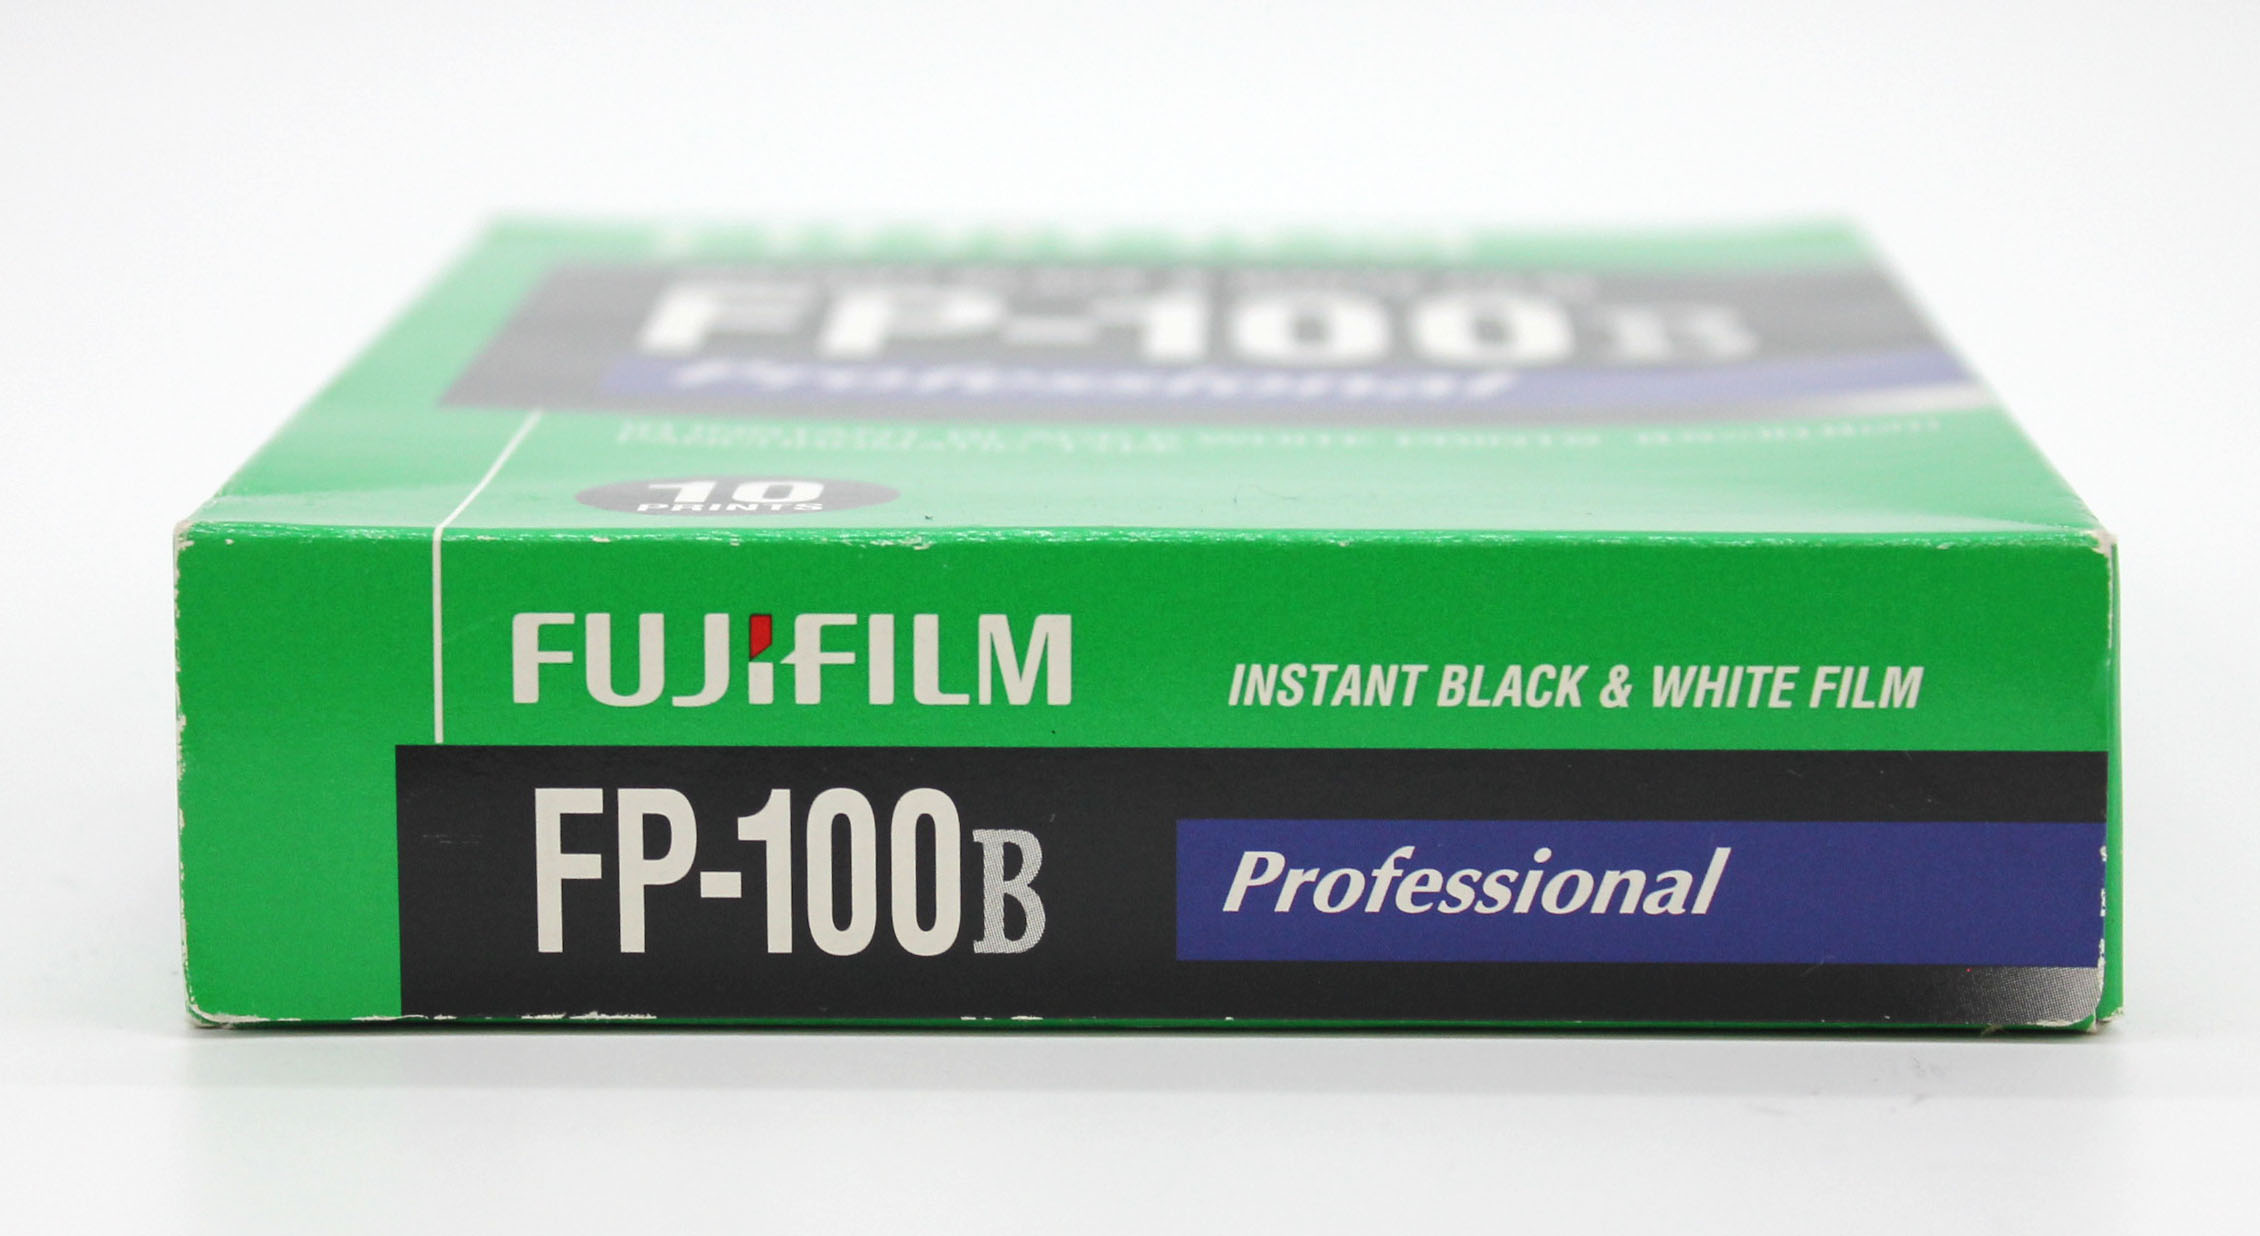  Fujifilm FP-100B Professional Instant Black & White Film (Exp 2009) from Japan Photo 4